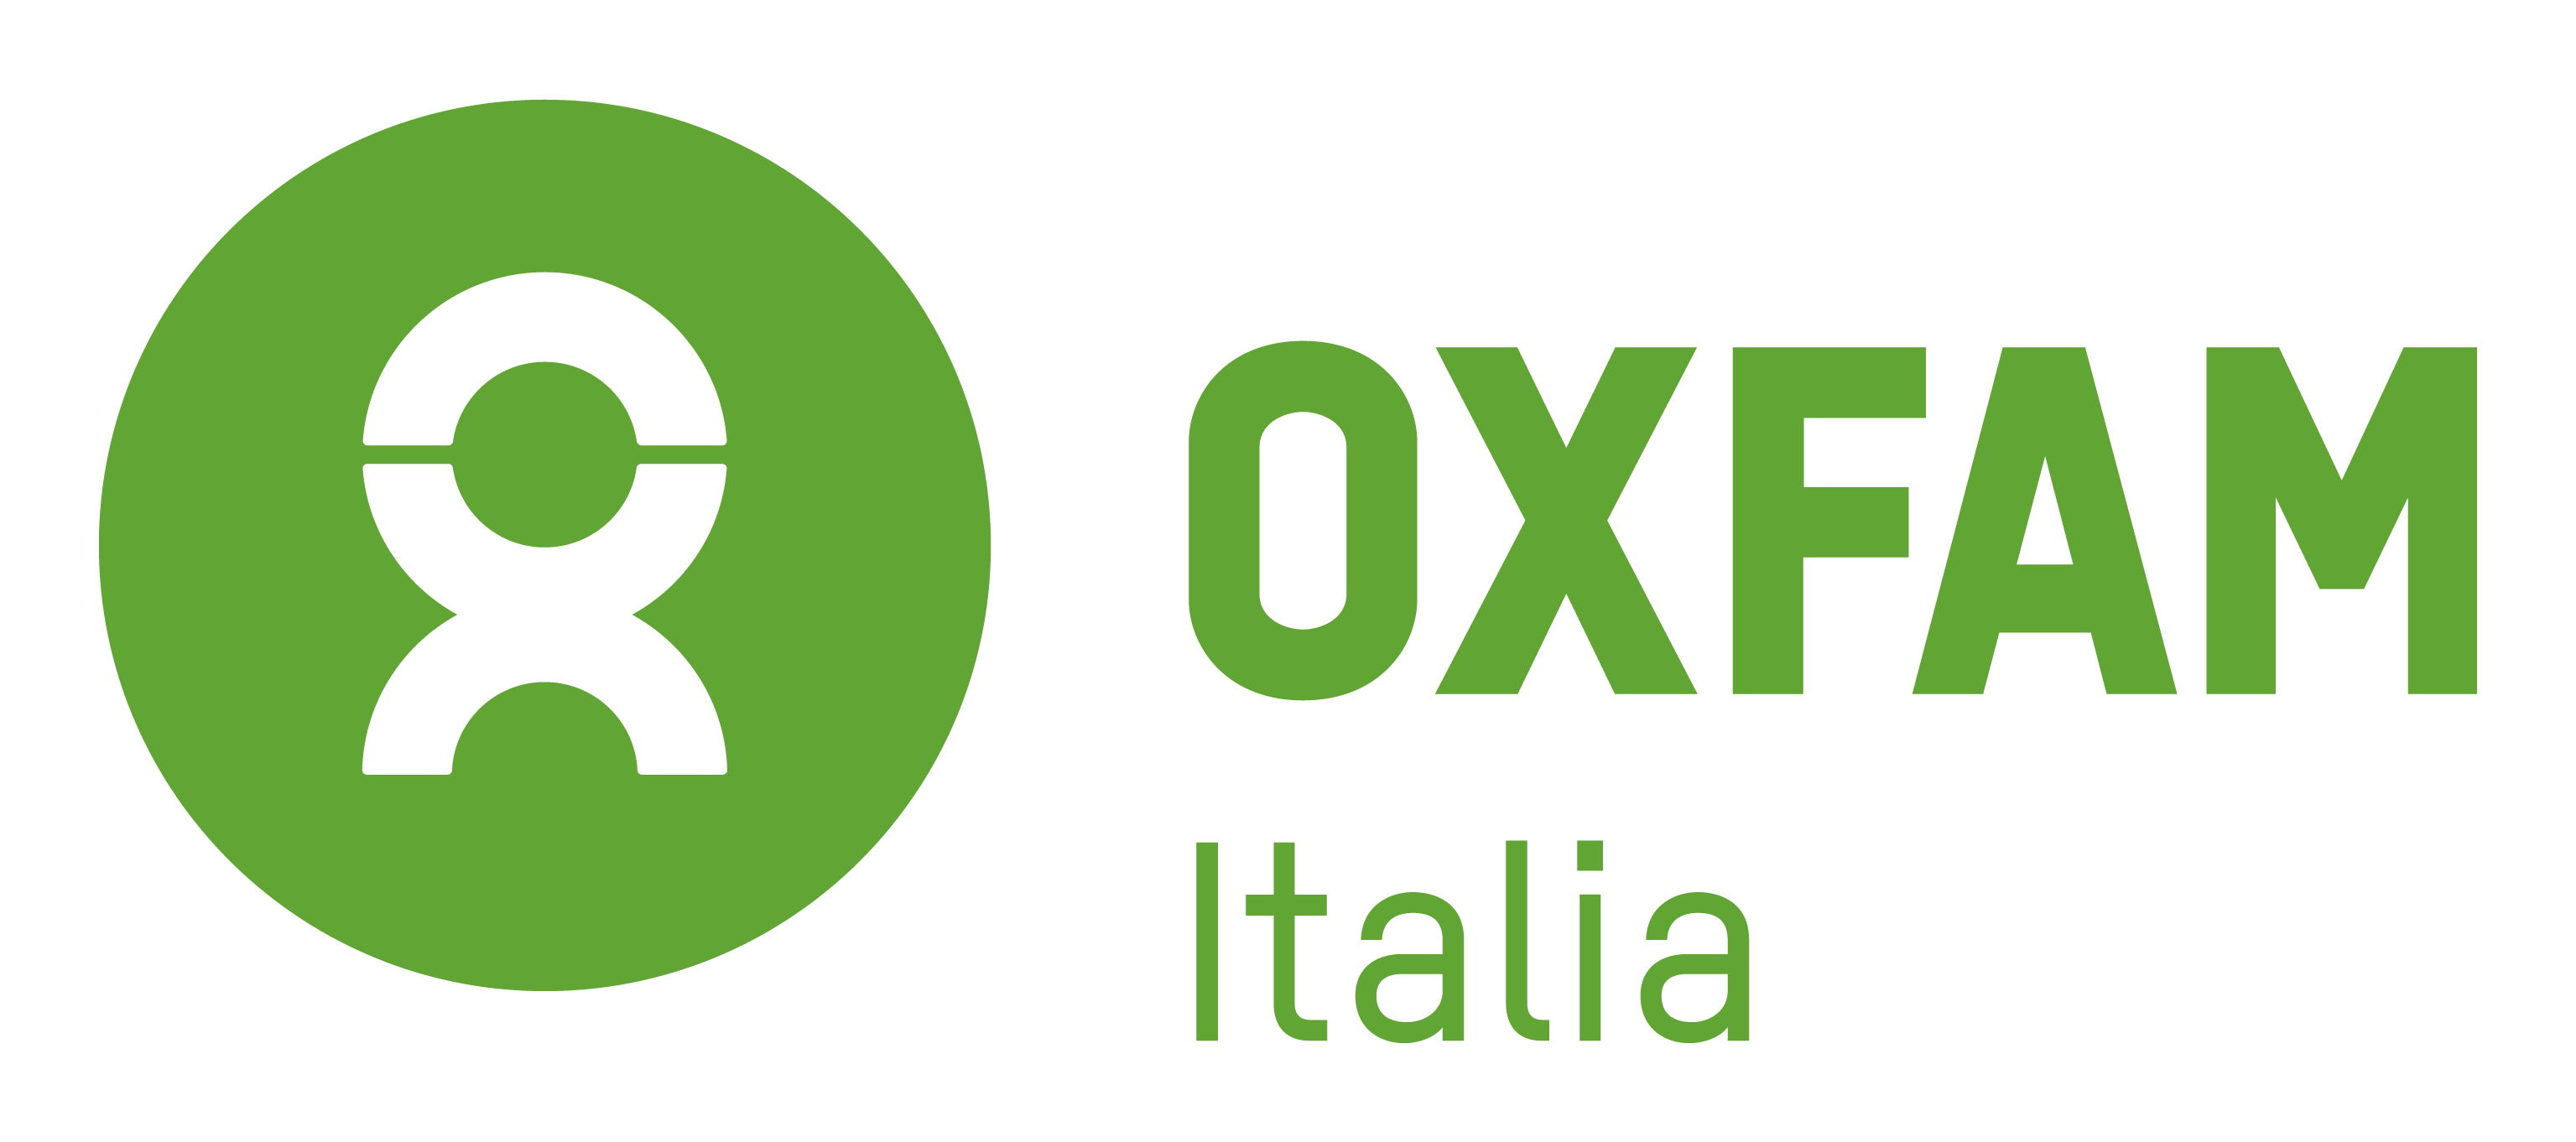 oxfam italia couples coordinates italy yoga retreat